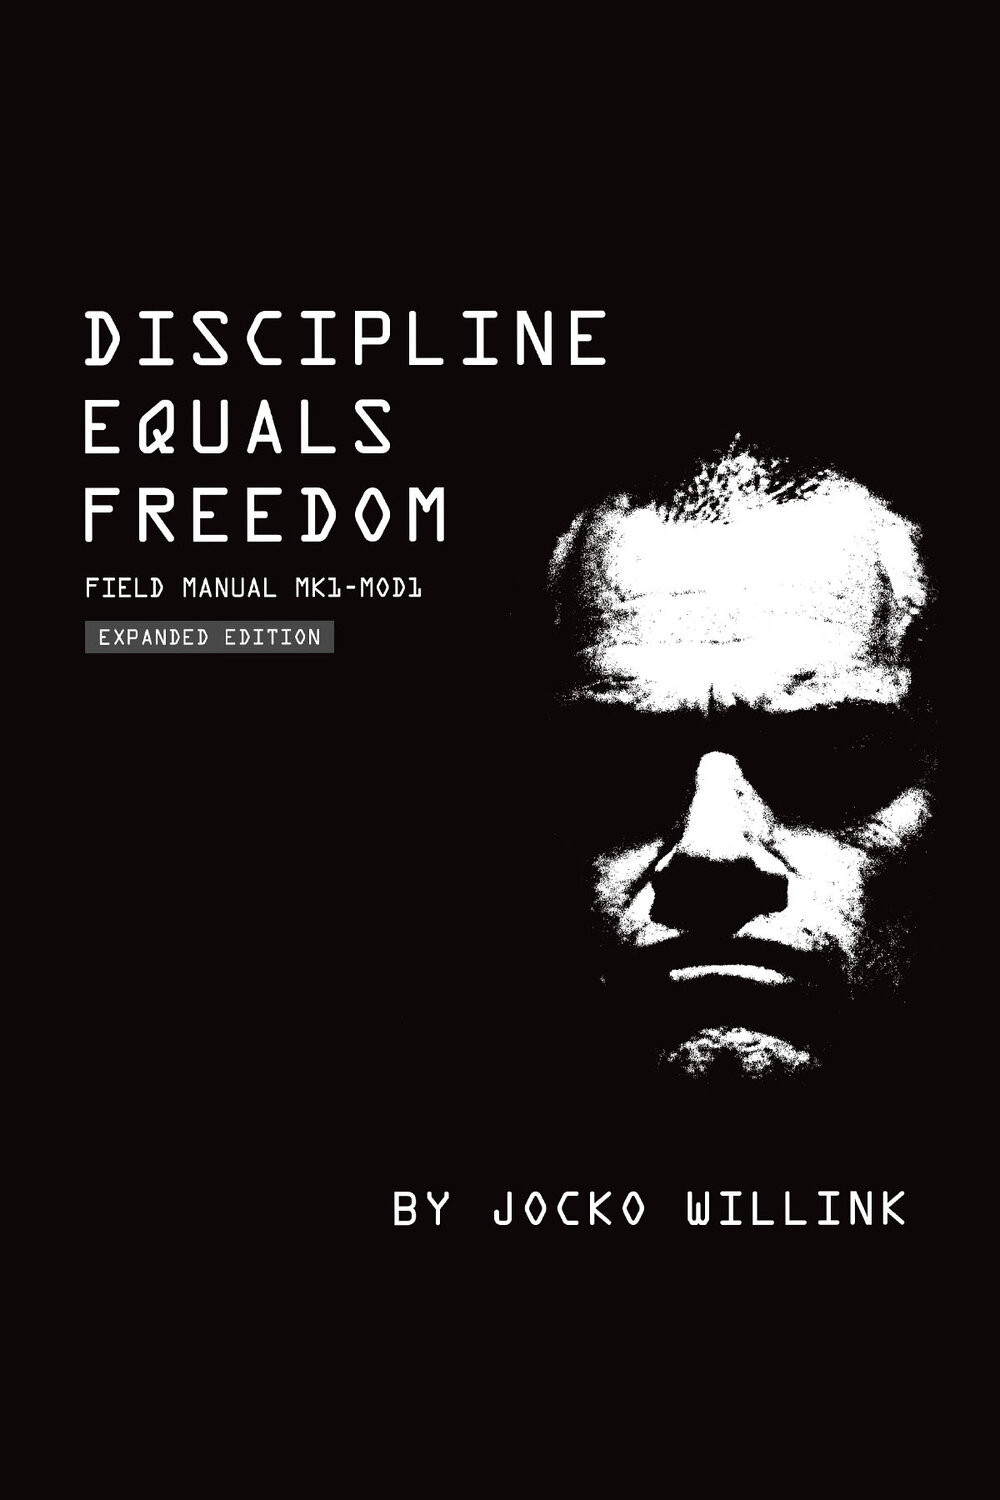 Discipline Equals Freedom by Jocko Willink